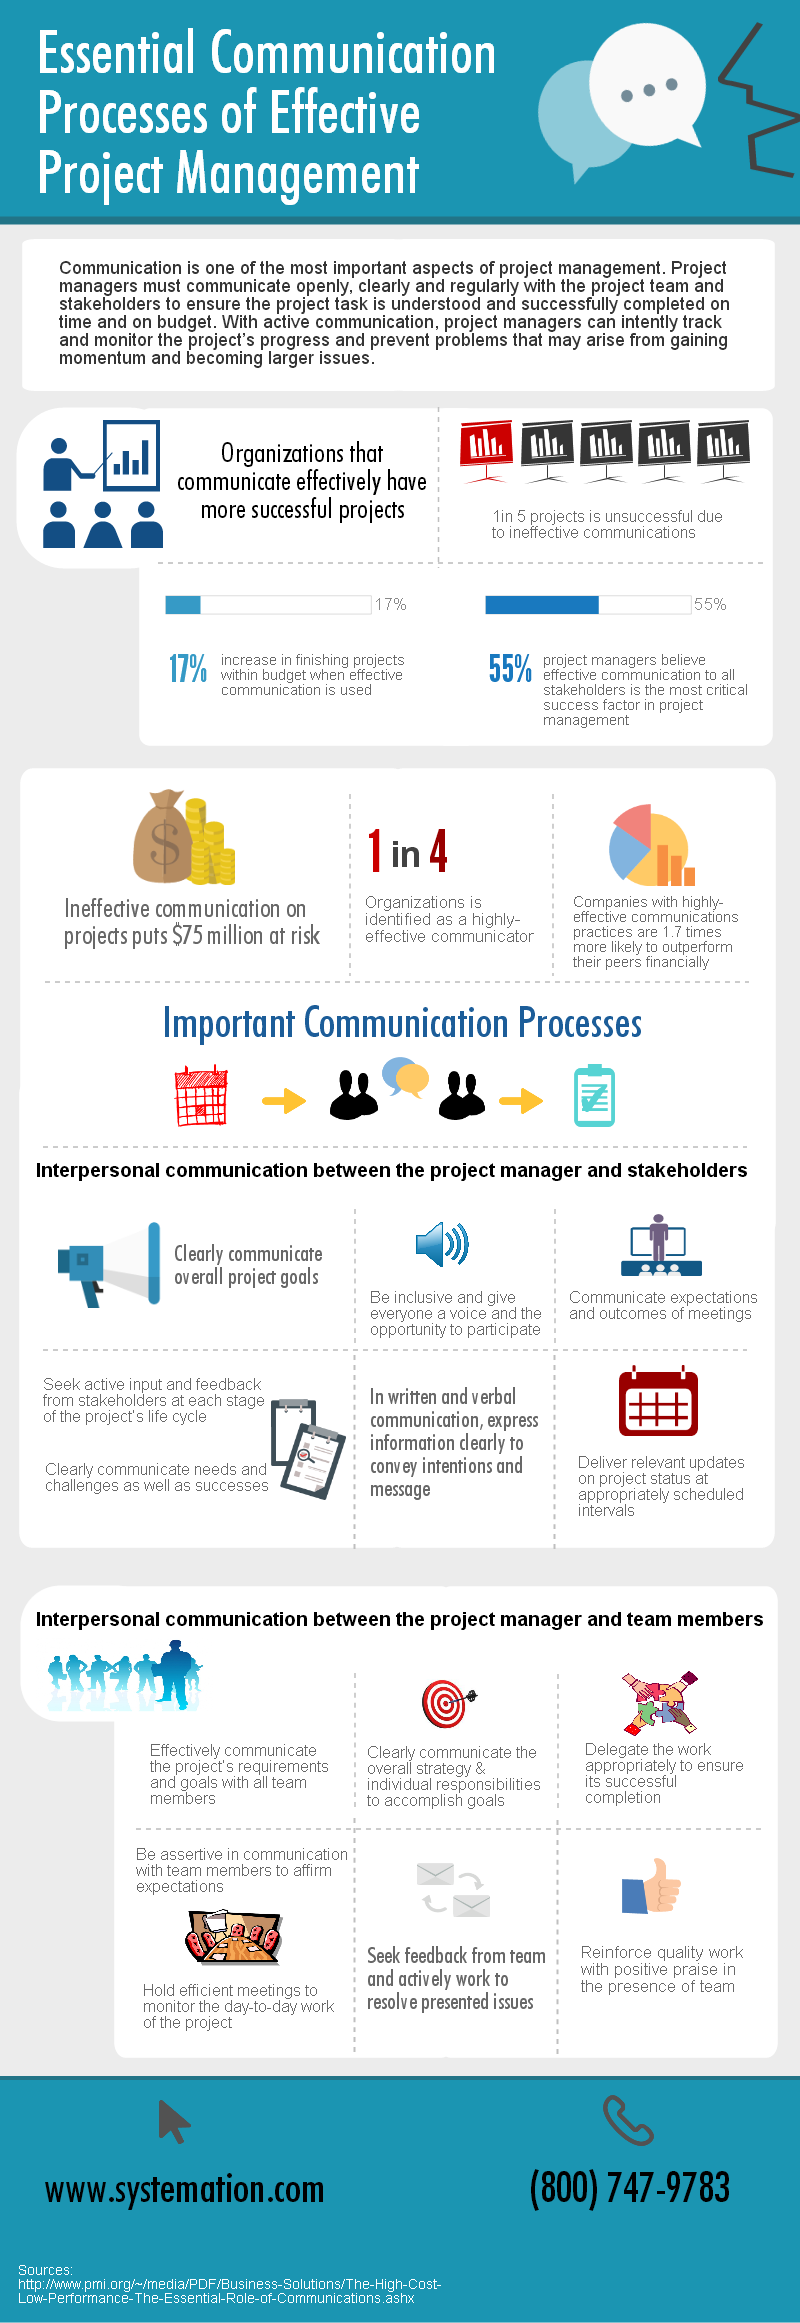 infographic-communication-processes-effective-project-management